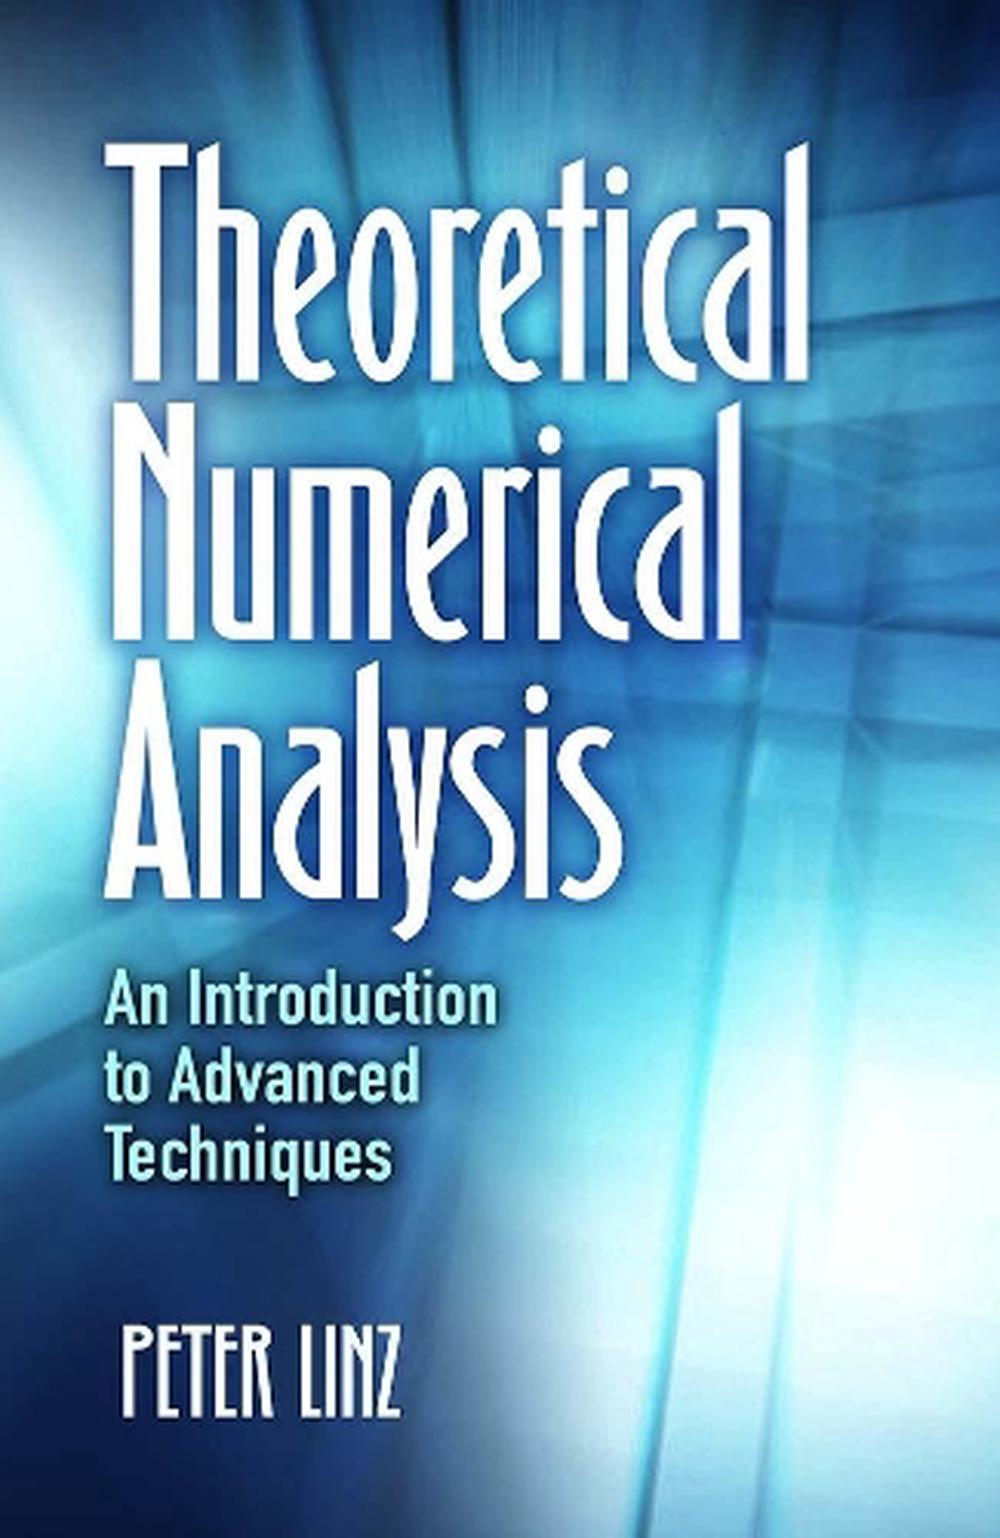 phd numerical analysis